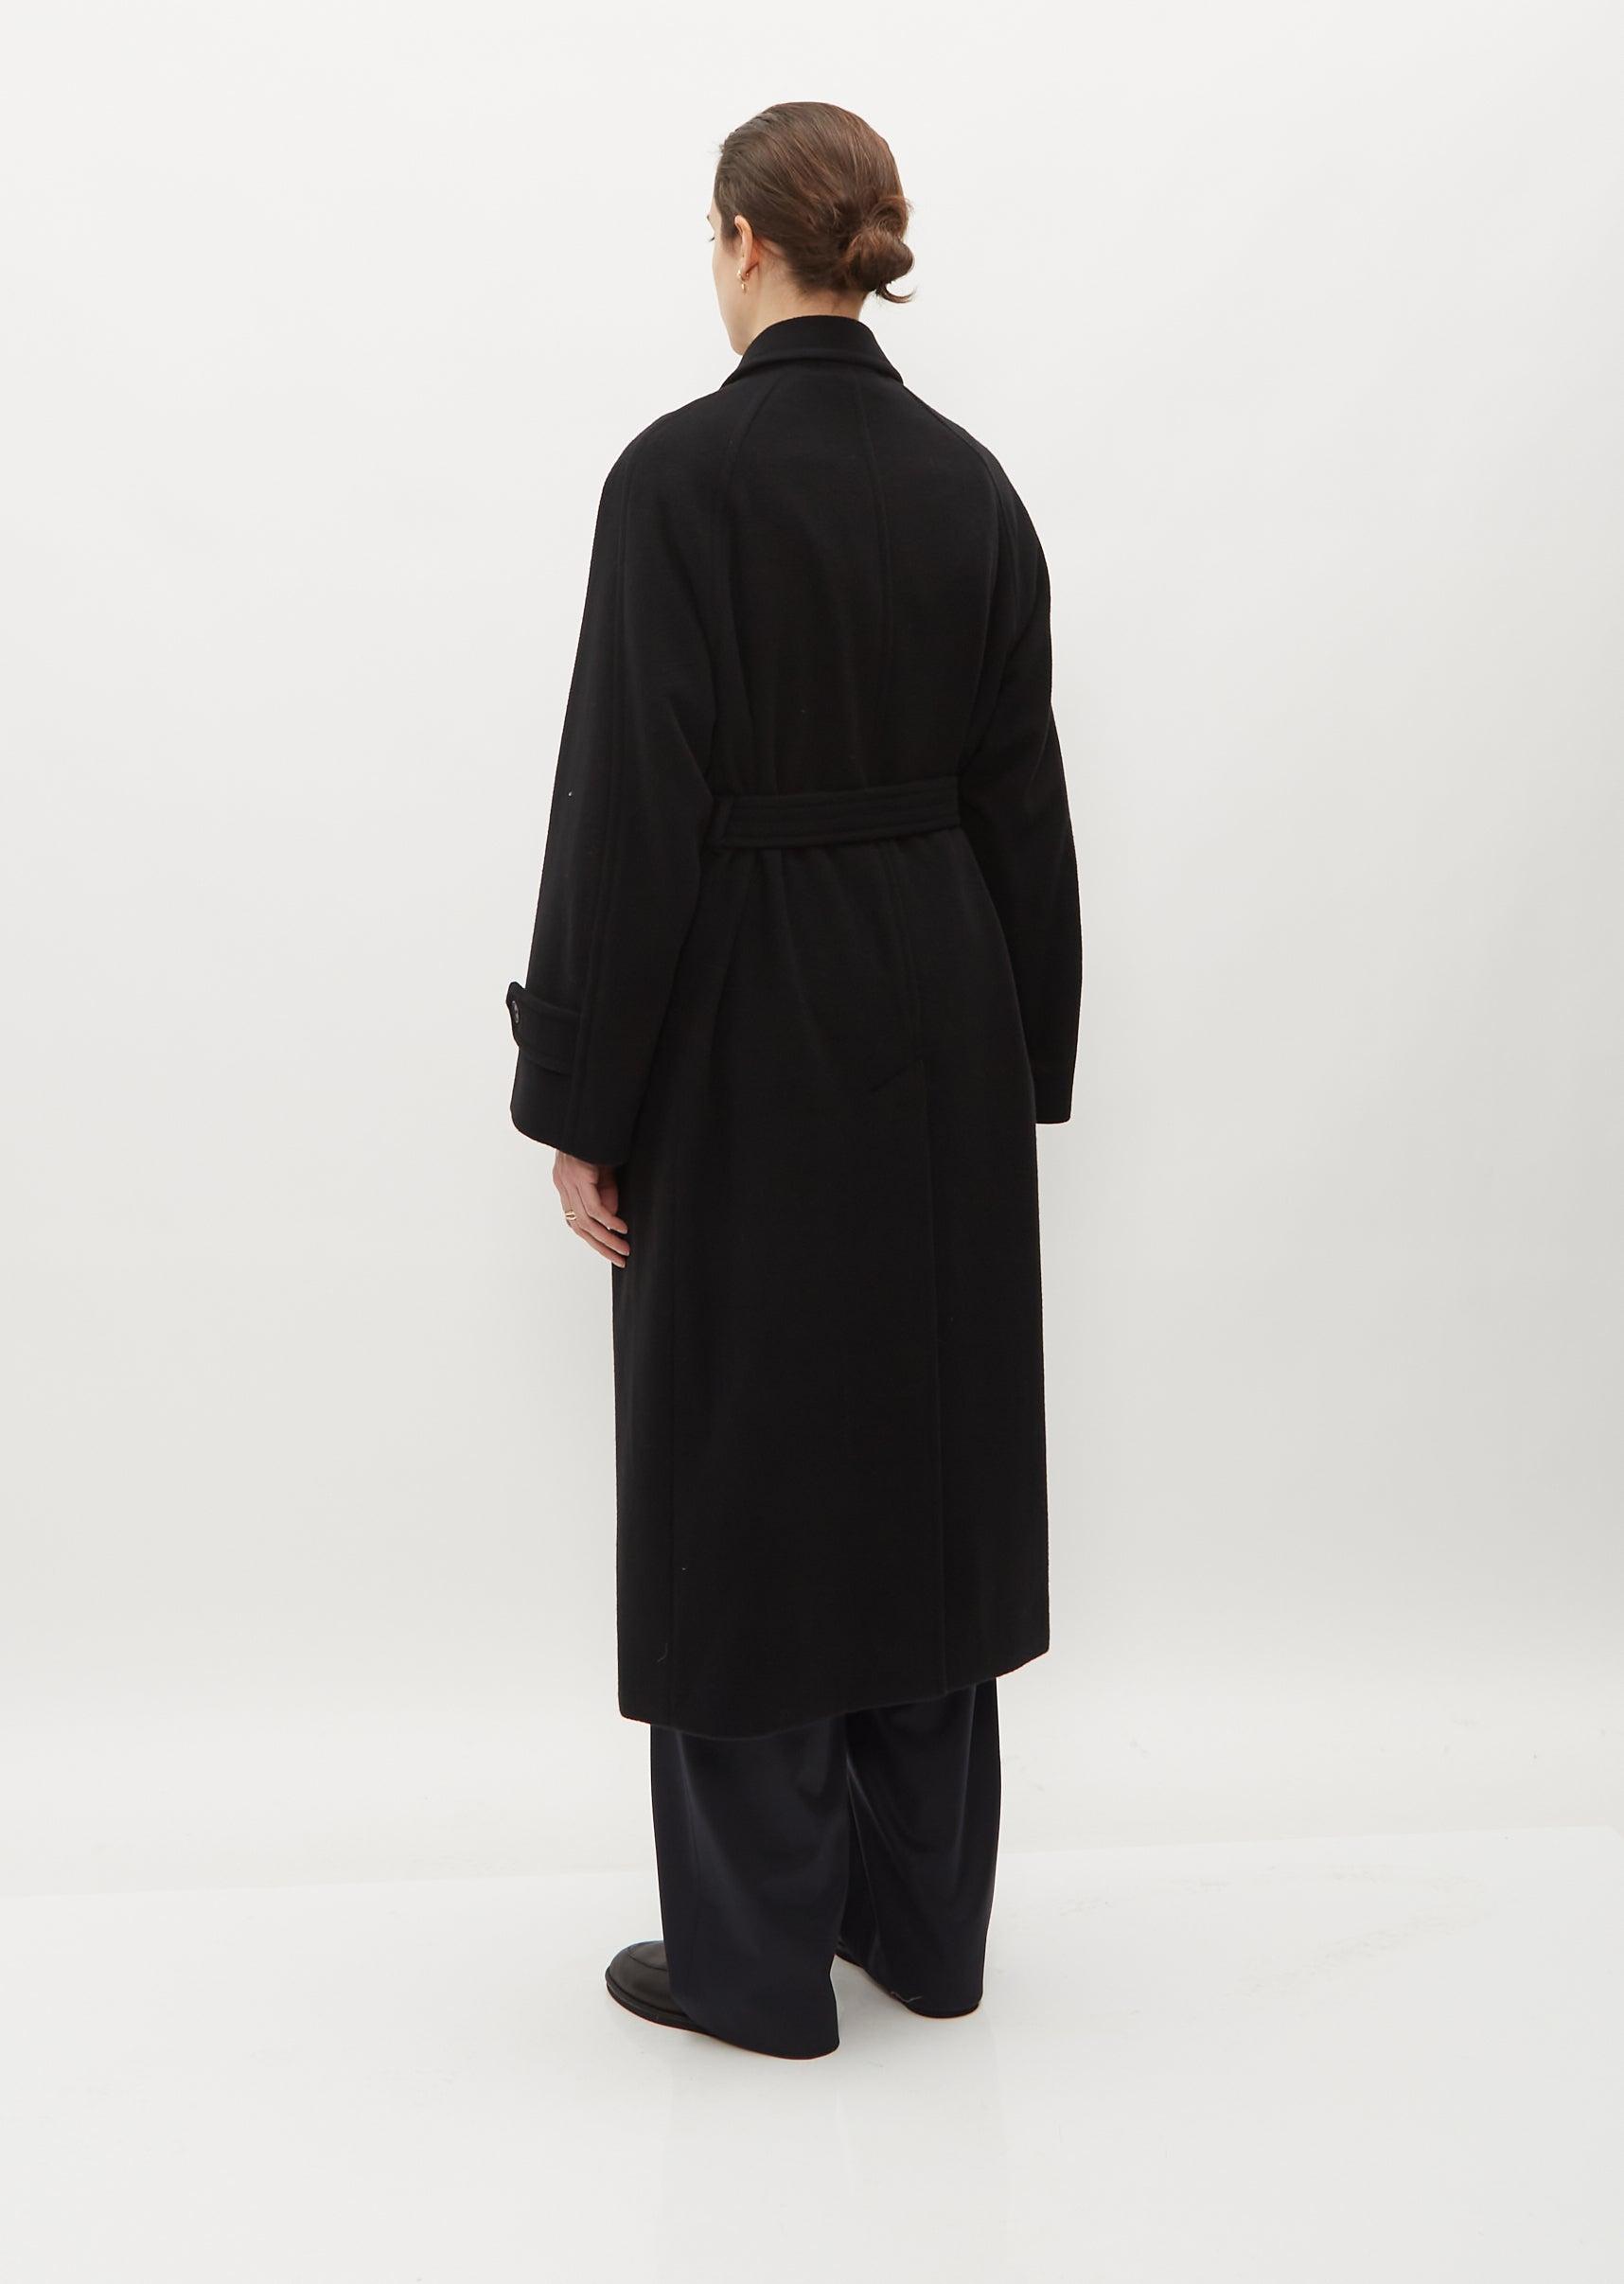 AURALEE Cashmere Wool Mosser Soutien Collar Coat in Black | Lyst